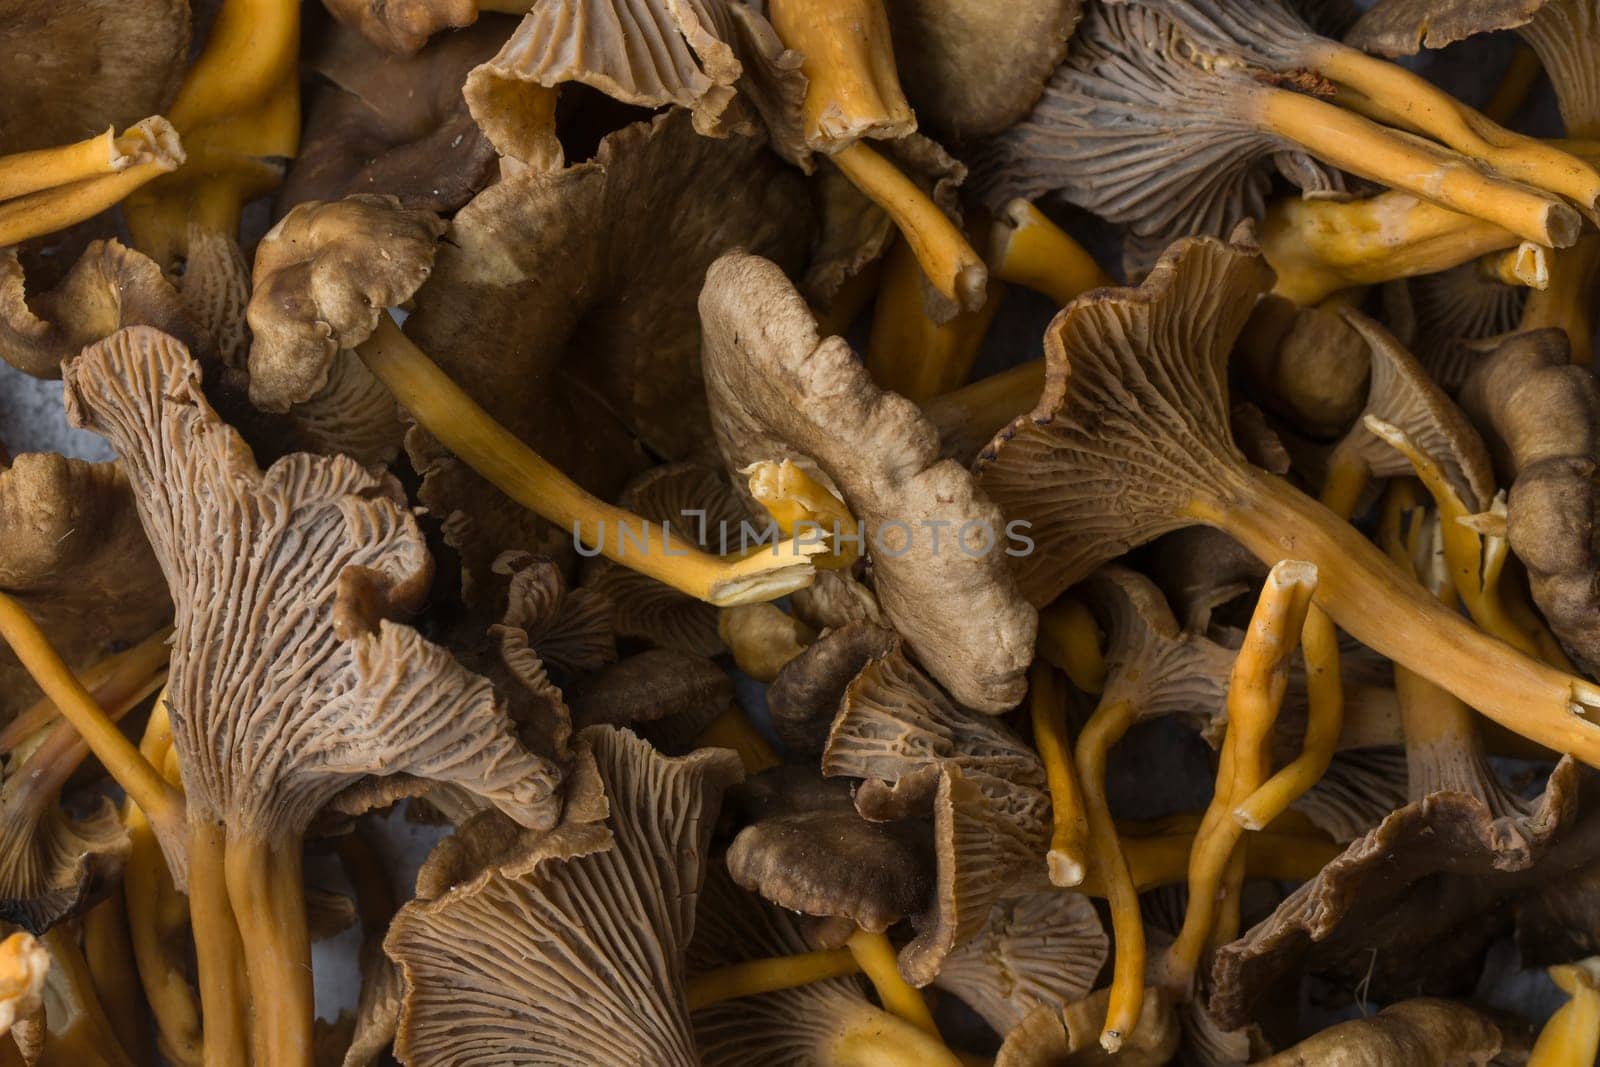 Craterellus cornucopioides, or horn of plenty, trumpet chanterelle, edible mushroom, pattern.